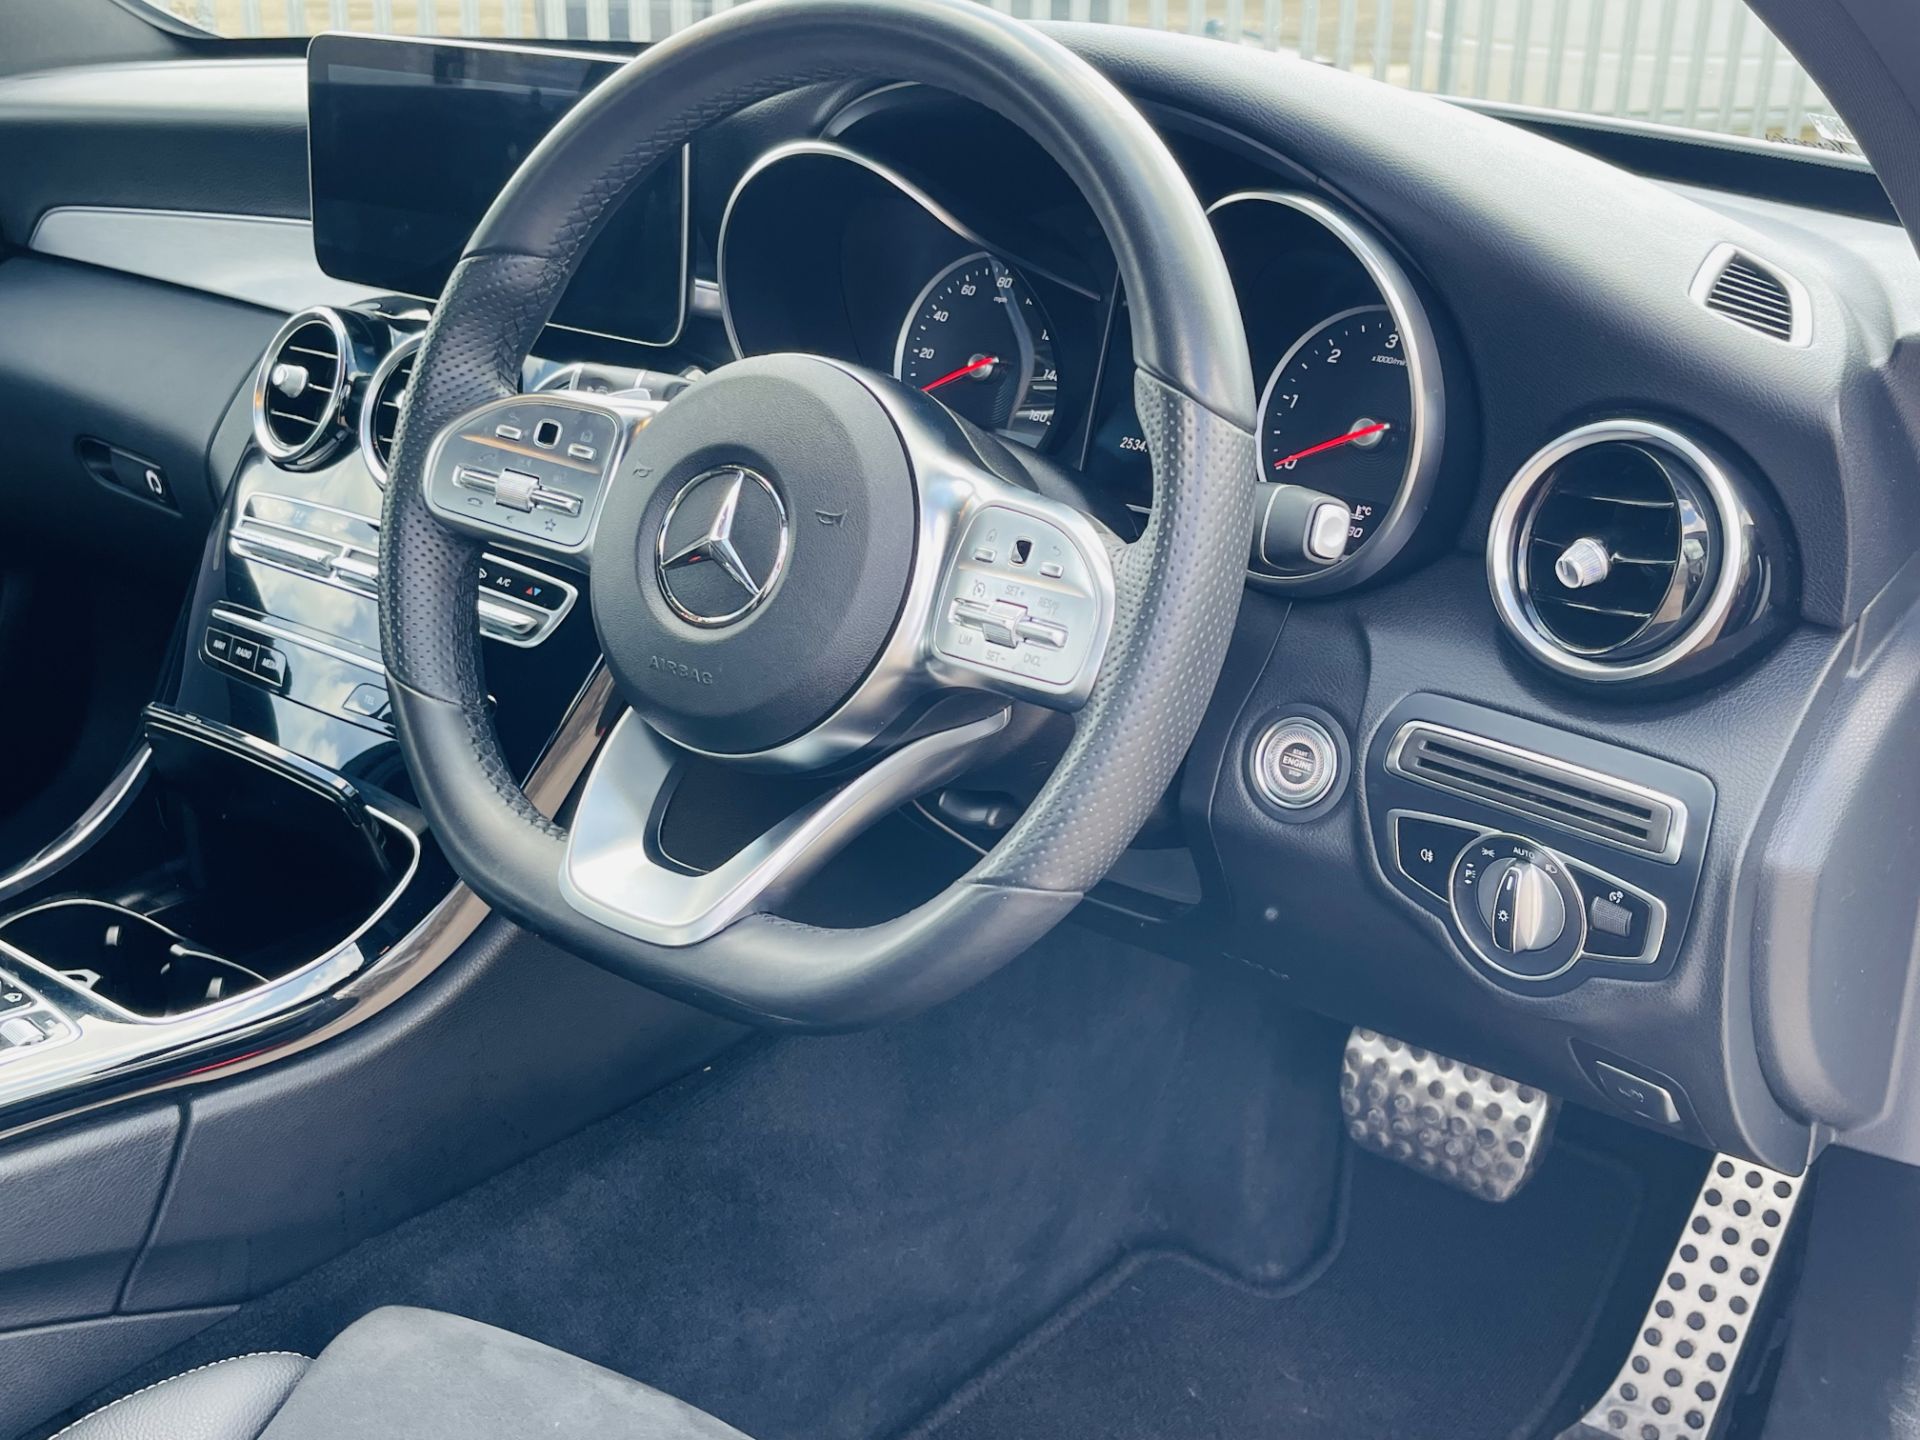 Mercedes Benz C220 AMG Line 9G-Tronic Auto 2019 ‘69 Reg’ - Sat Nav - A/C - Euro 6 - ULEZ Compliant - Image 16 of 30